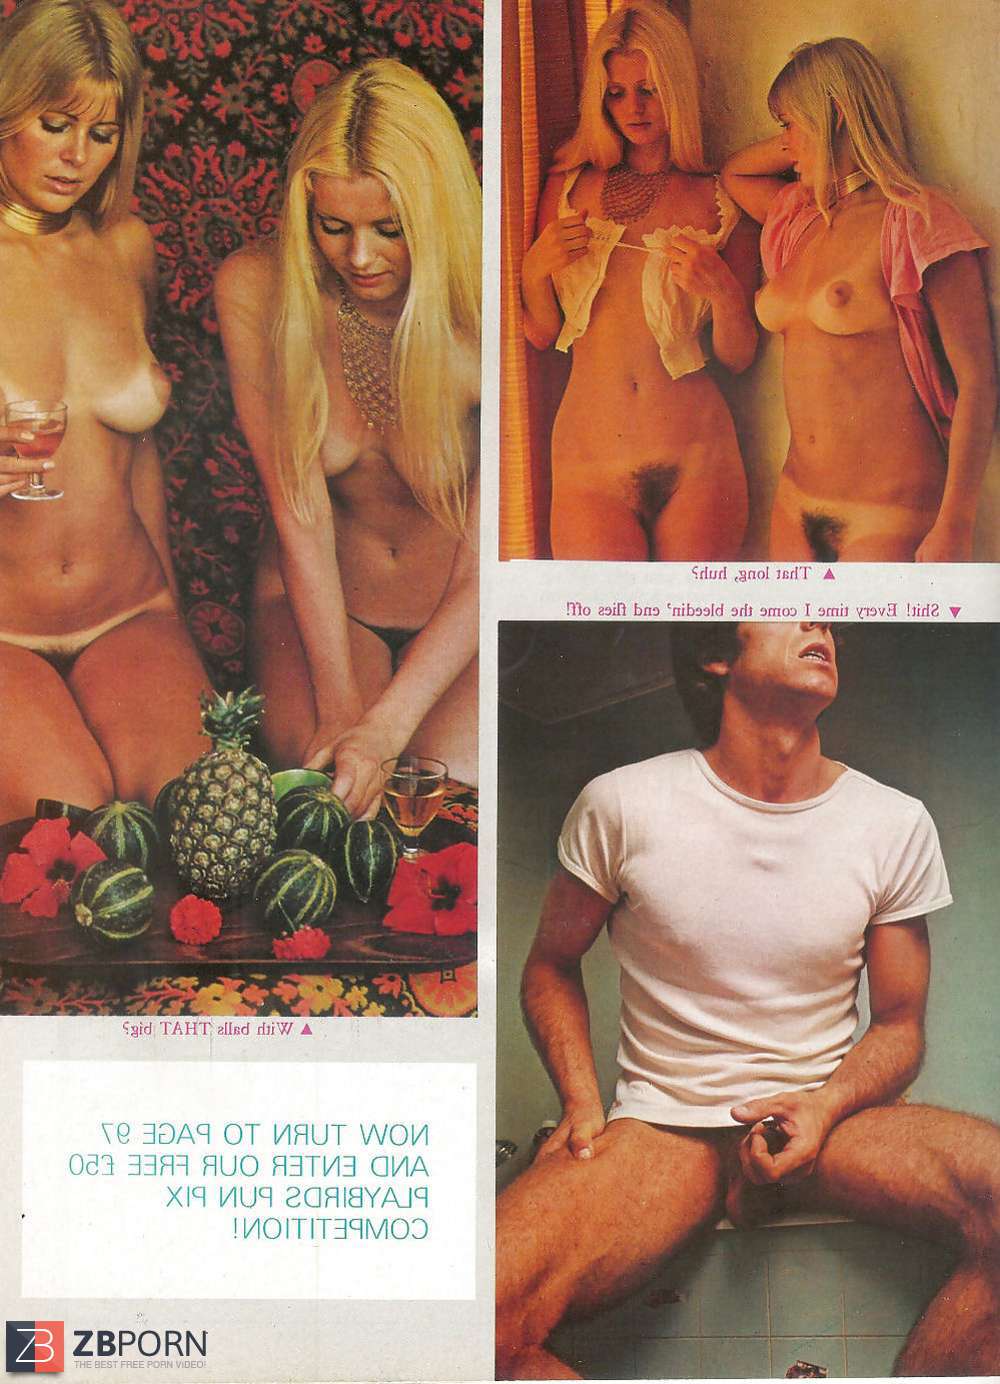 Female porn stars of the 70s